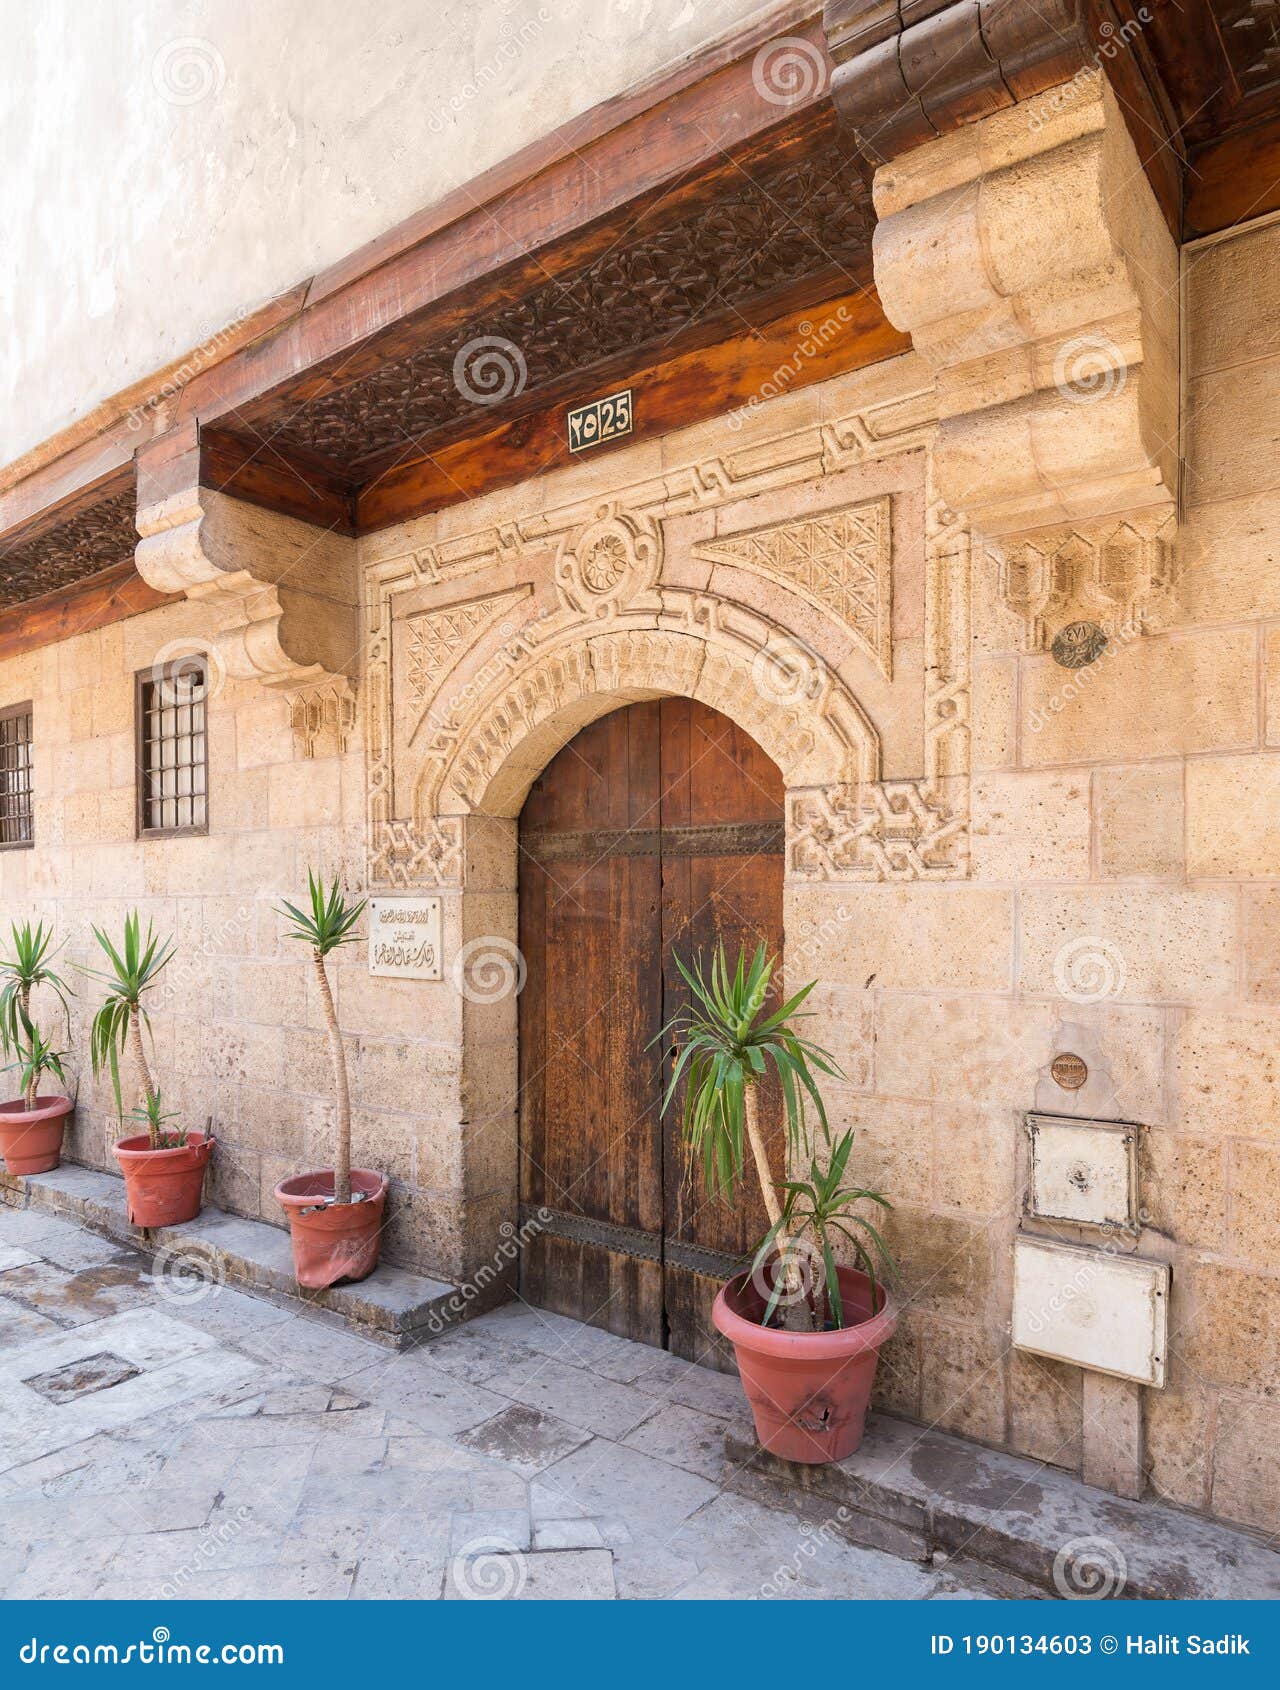 stone bricks wall with arched wooden door of house of moustafa gaafar al selehdar, cairo, egypt